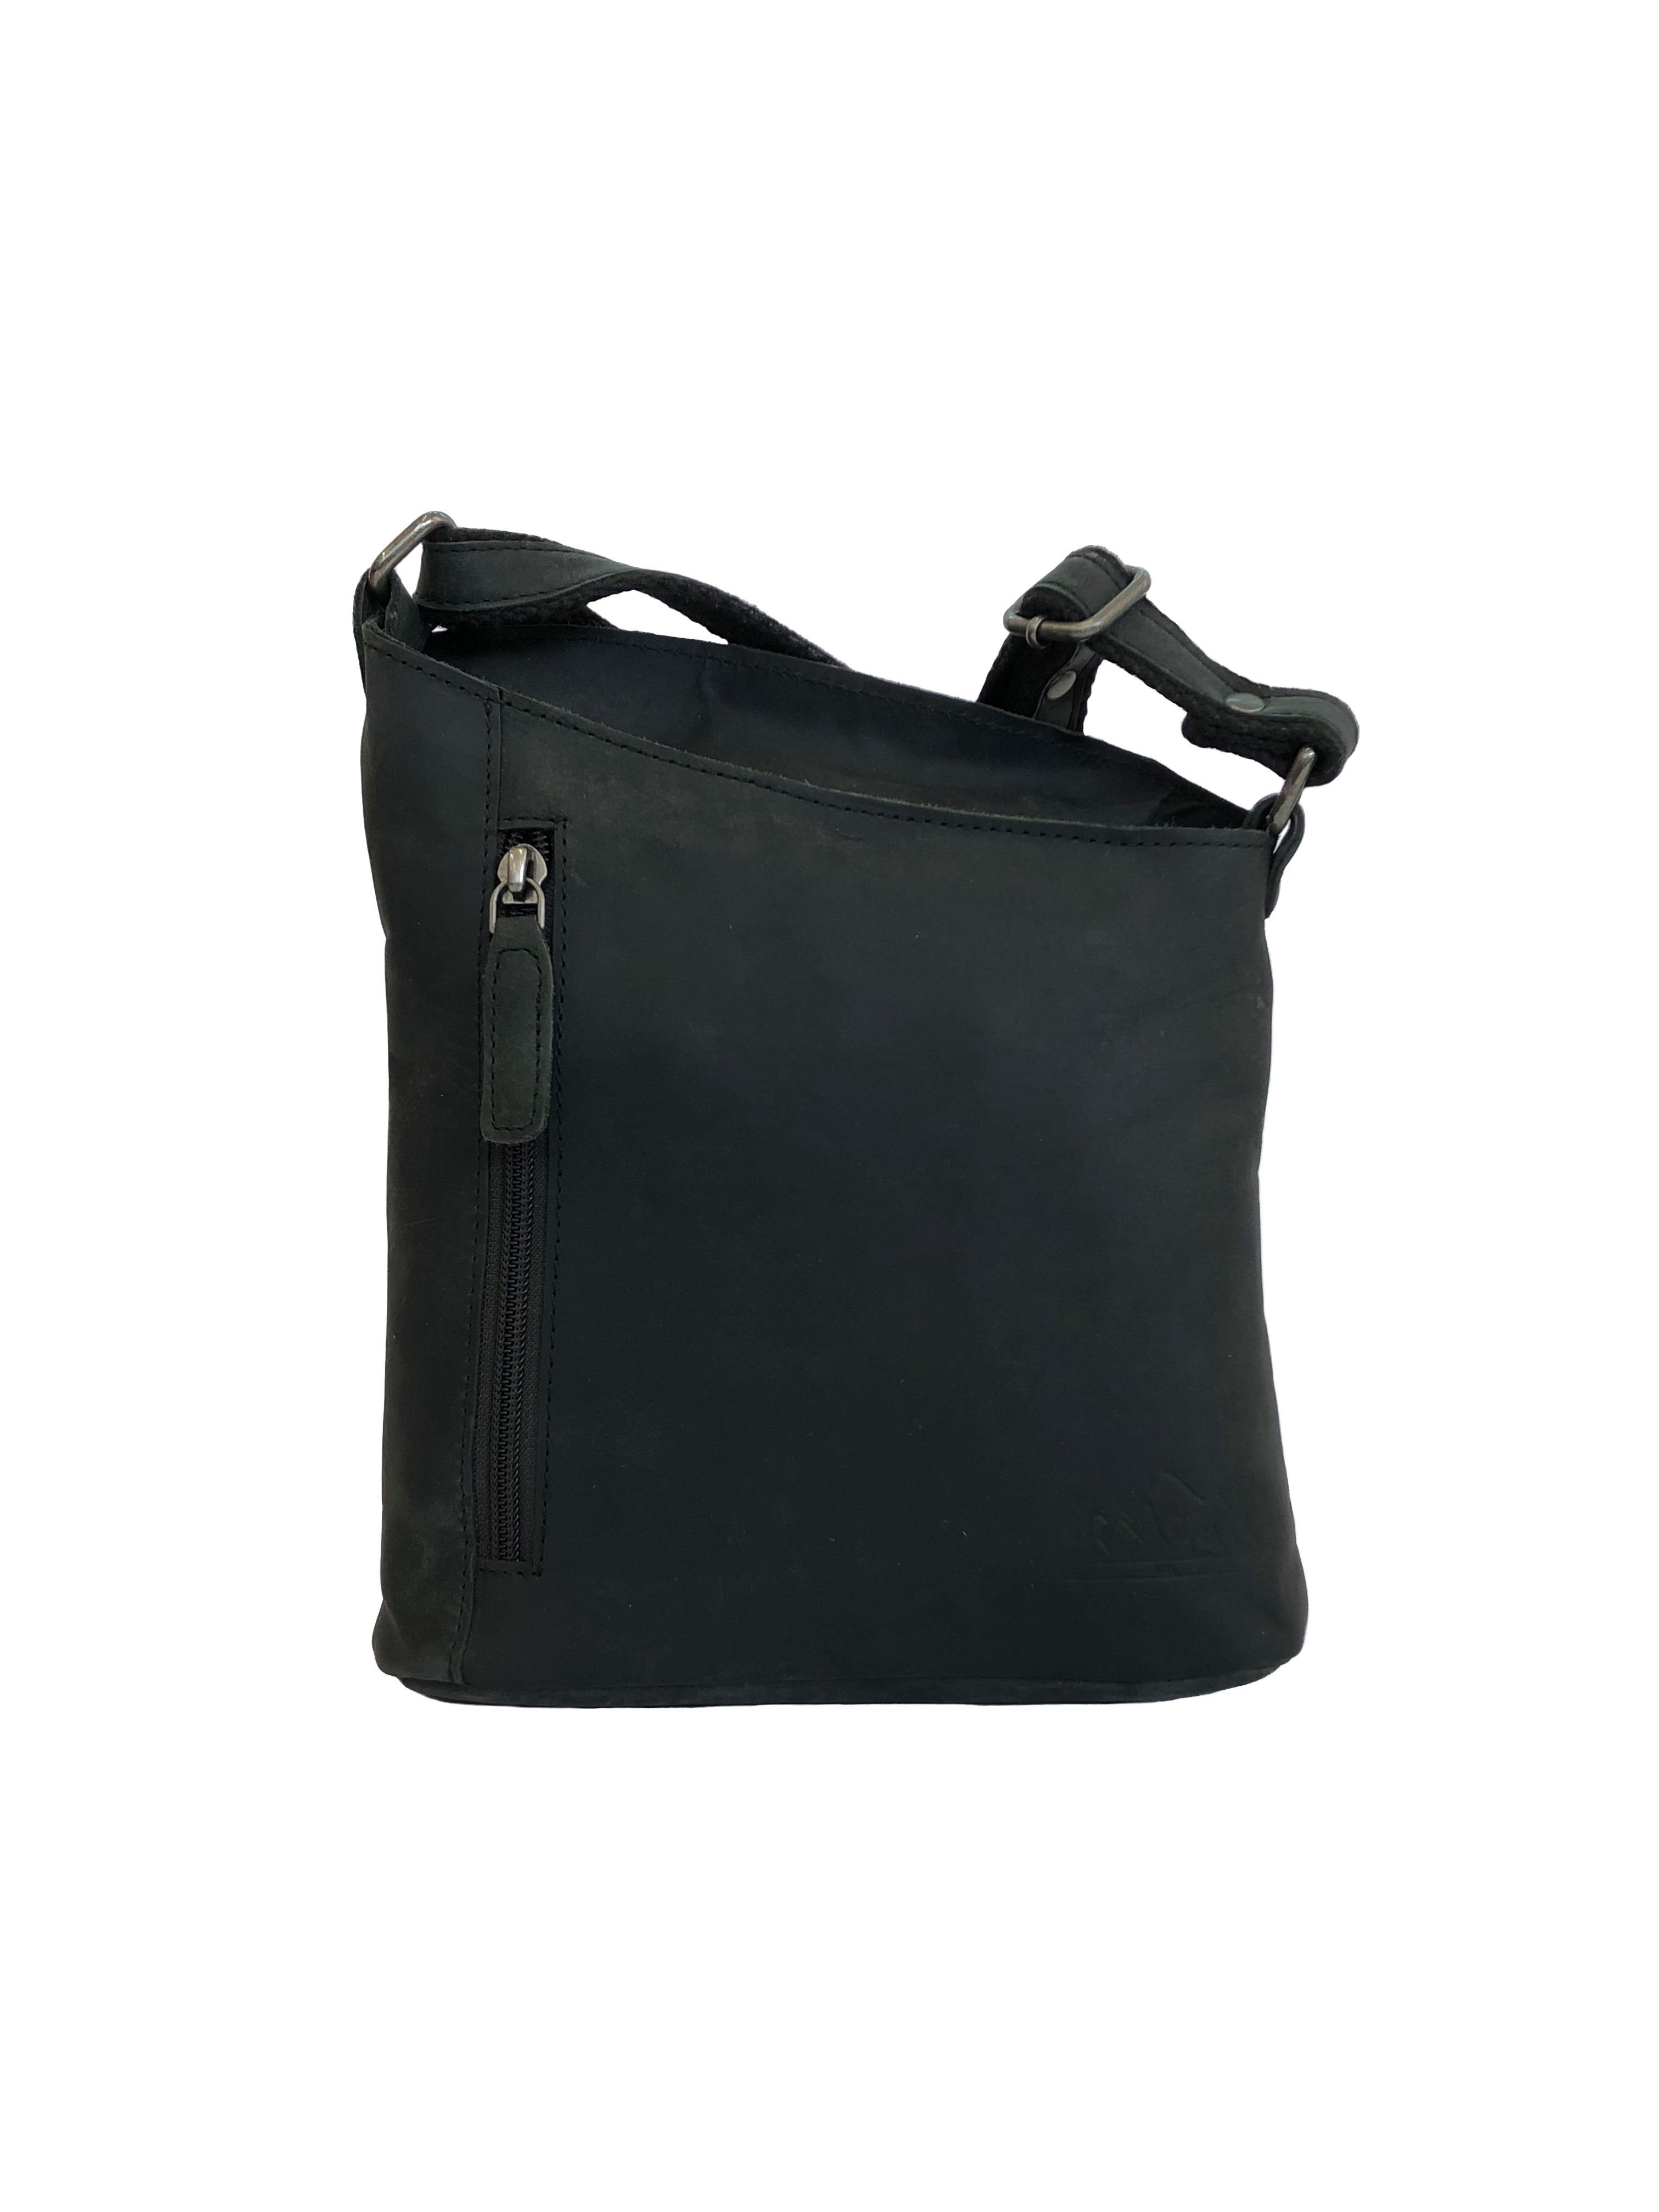 Bayern Bag Handtasche PAULA, Ledertasche Umhängetasche Crossbody Bag Vintage Black